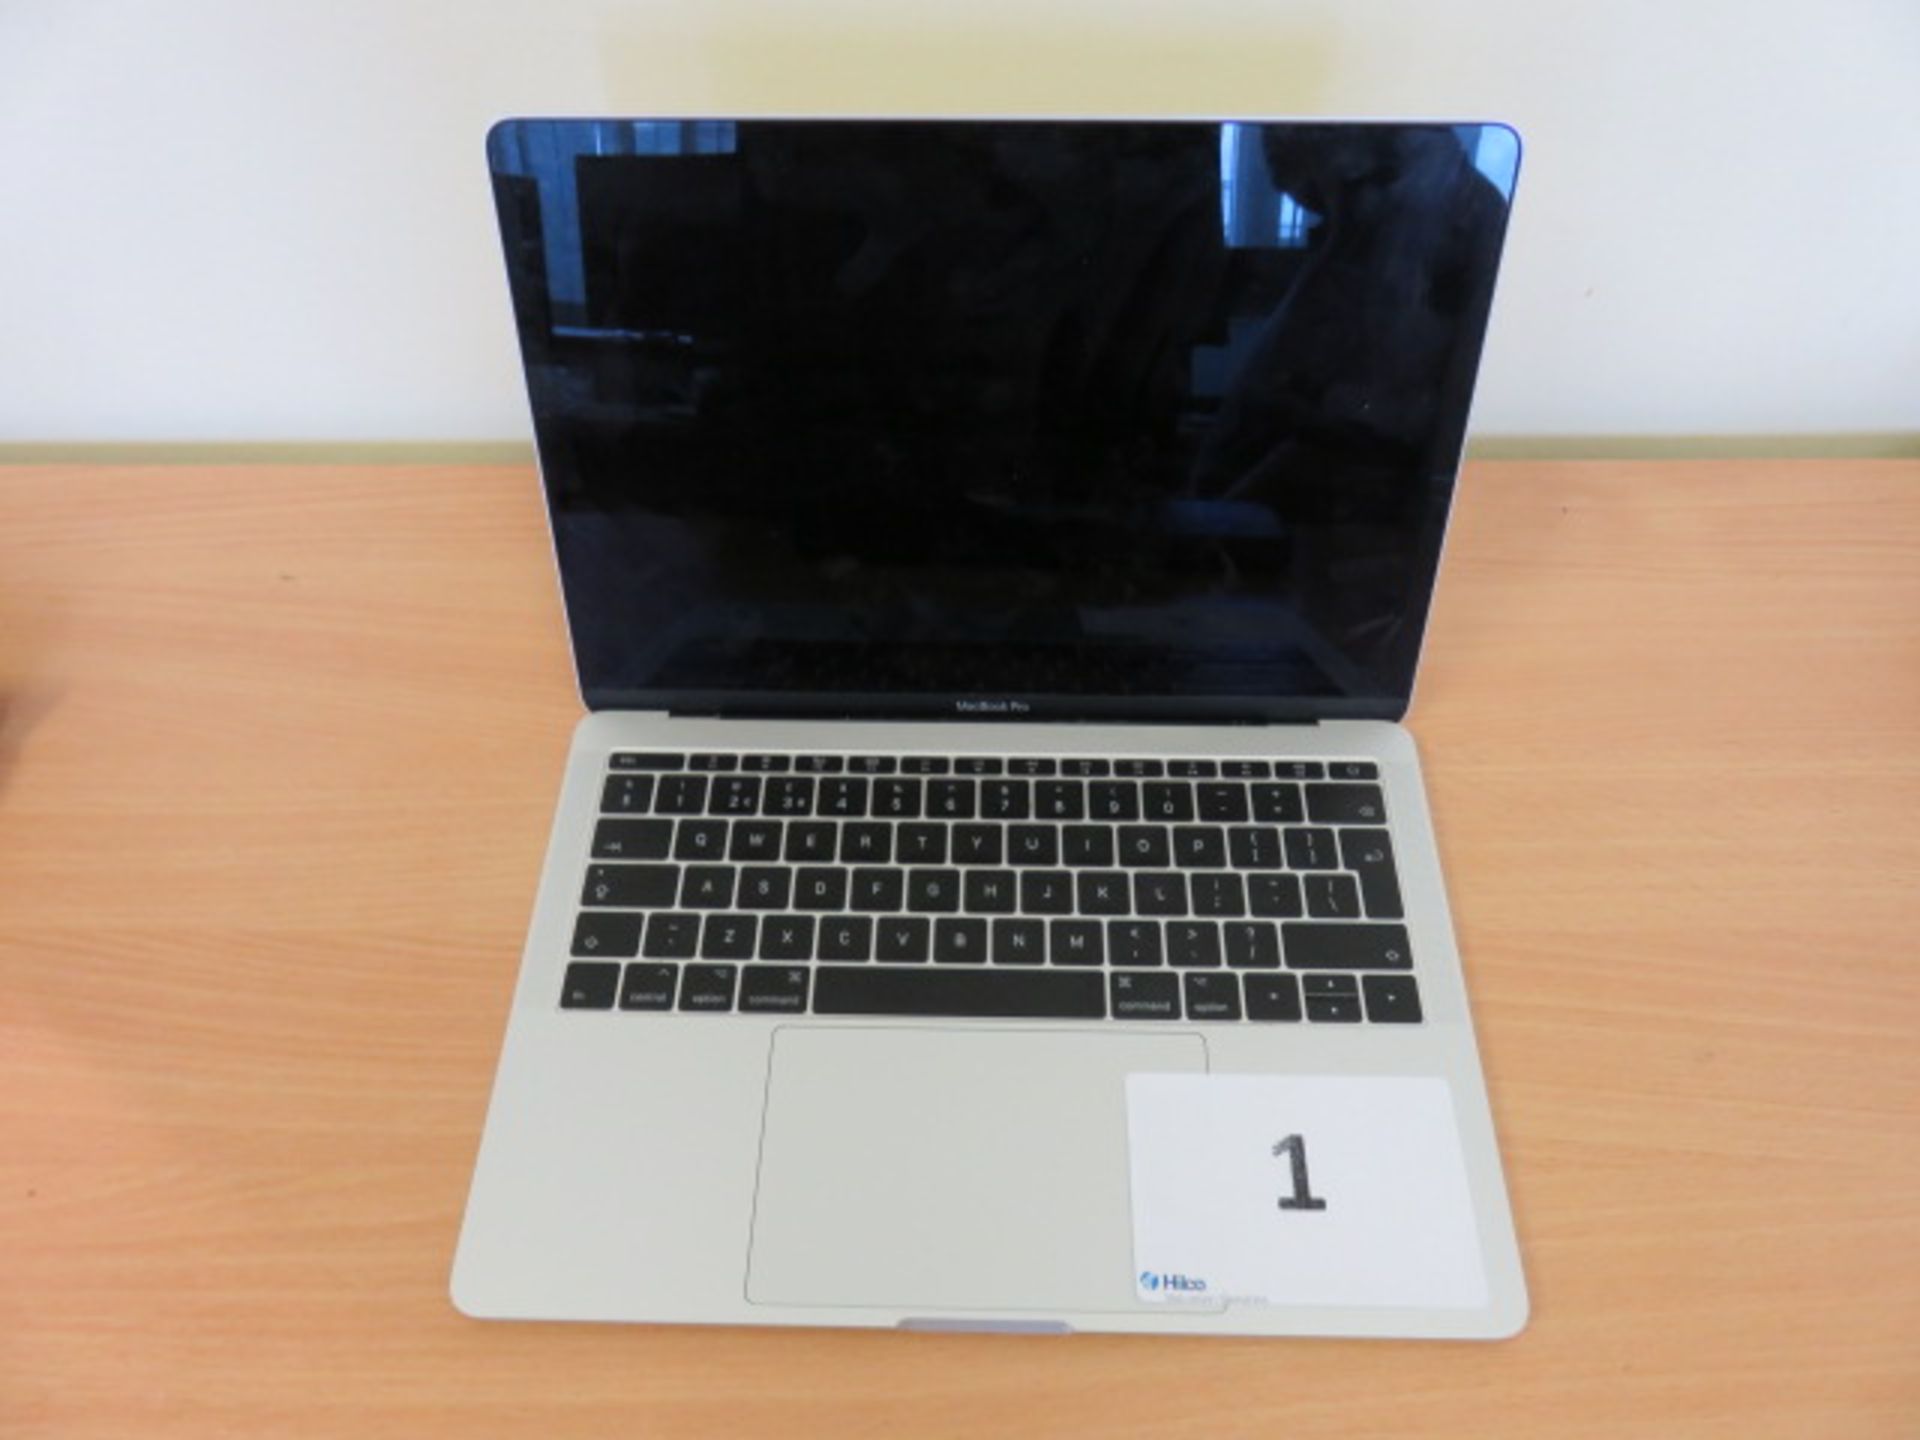 Apple Macbook Pro A1708 13in Core i5 Laptop (2017) Serial No. C02W8356HV27 (Asset No. LTM-189)